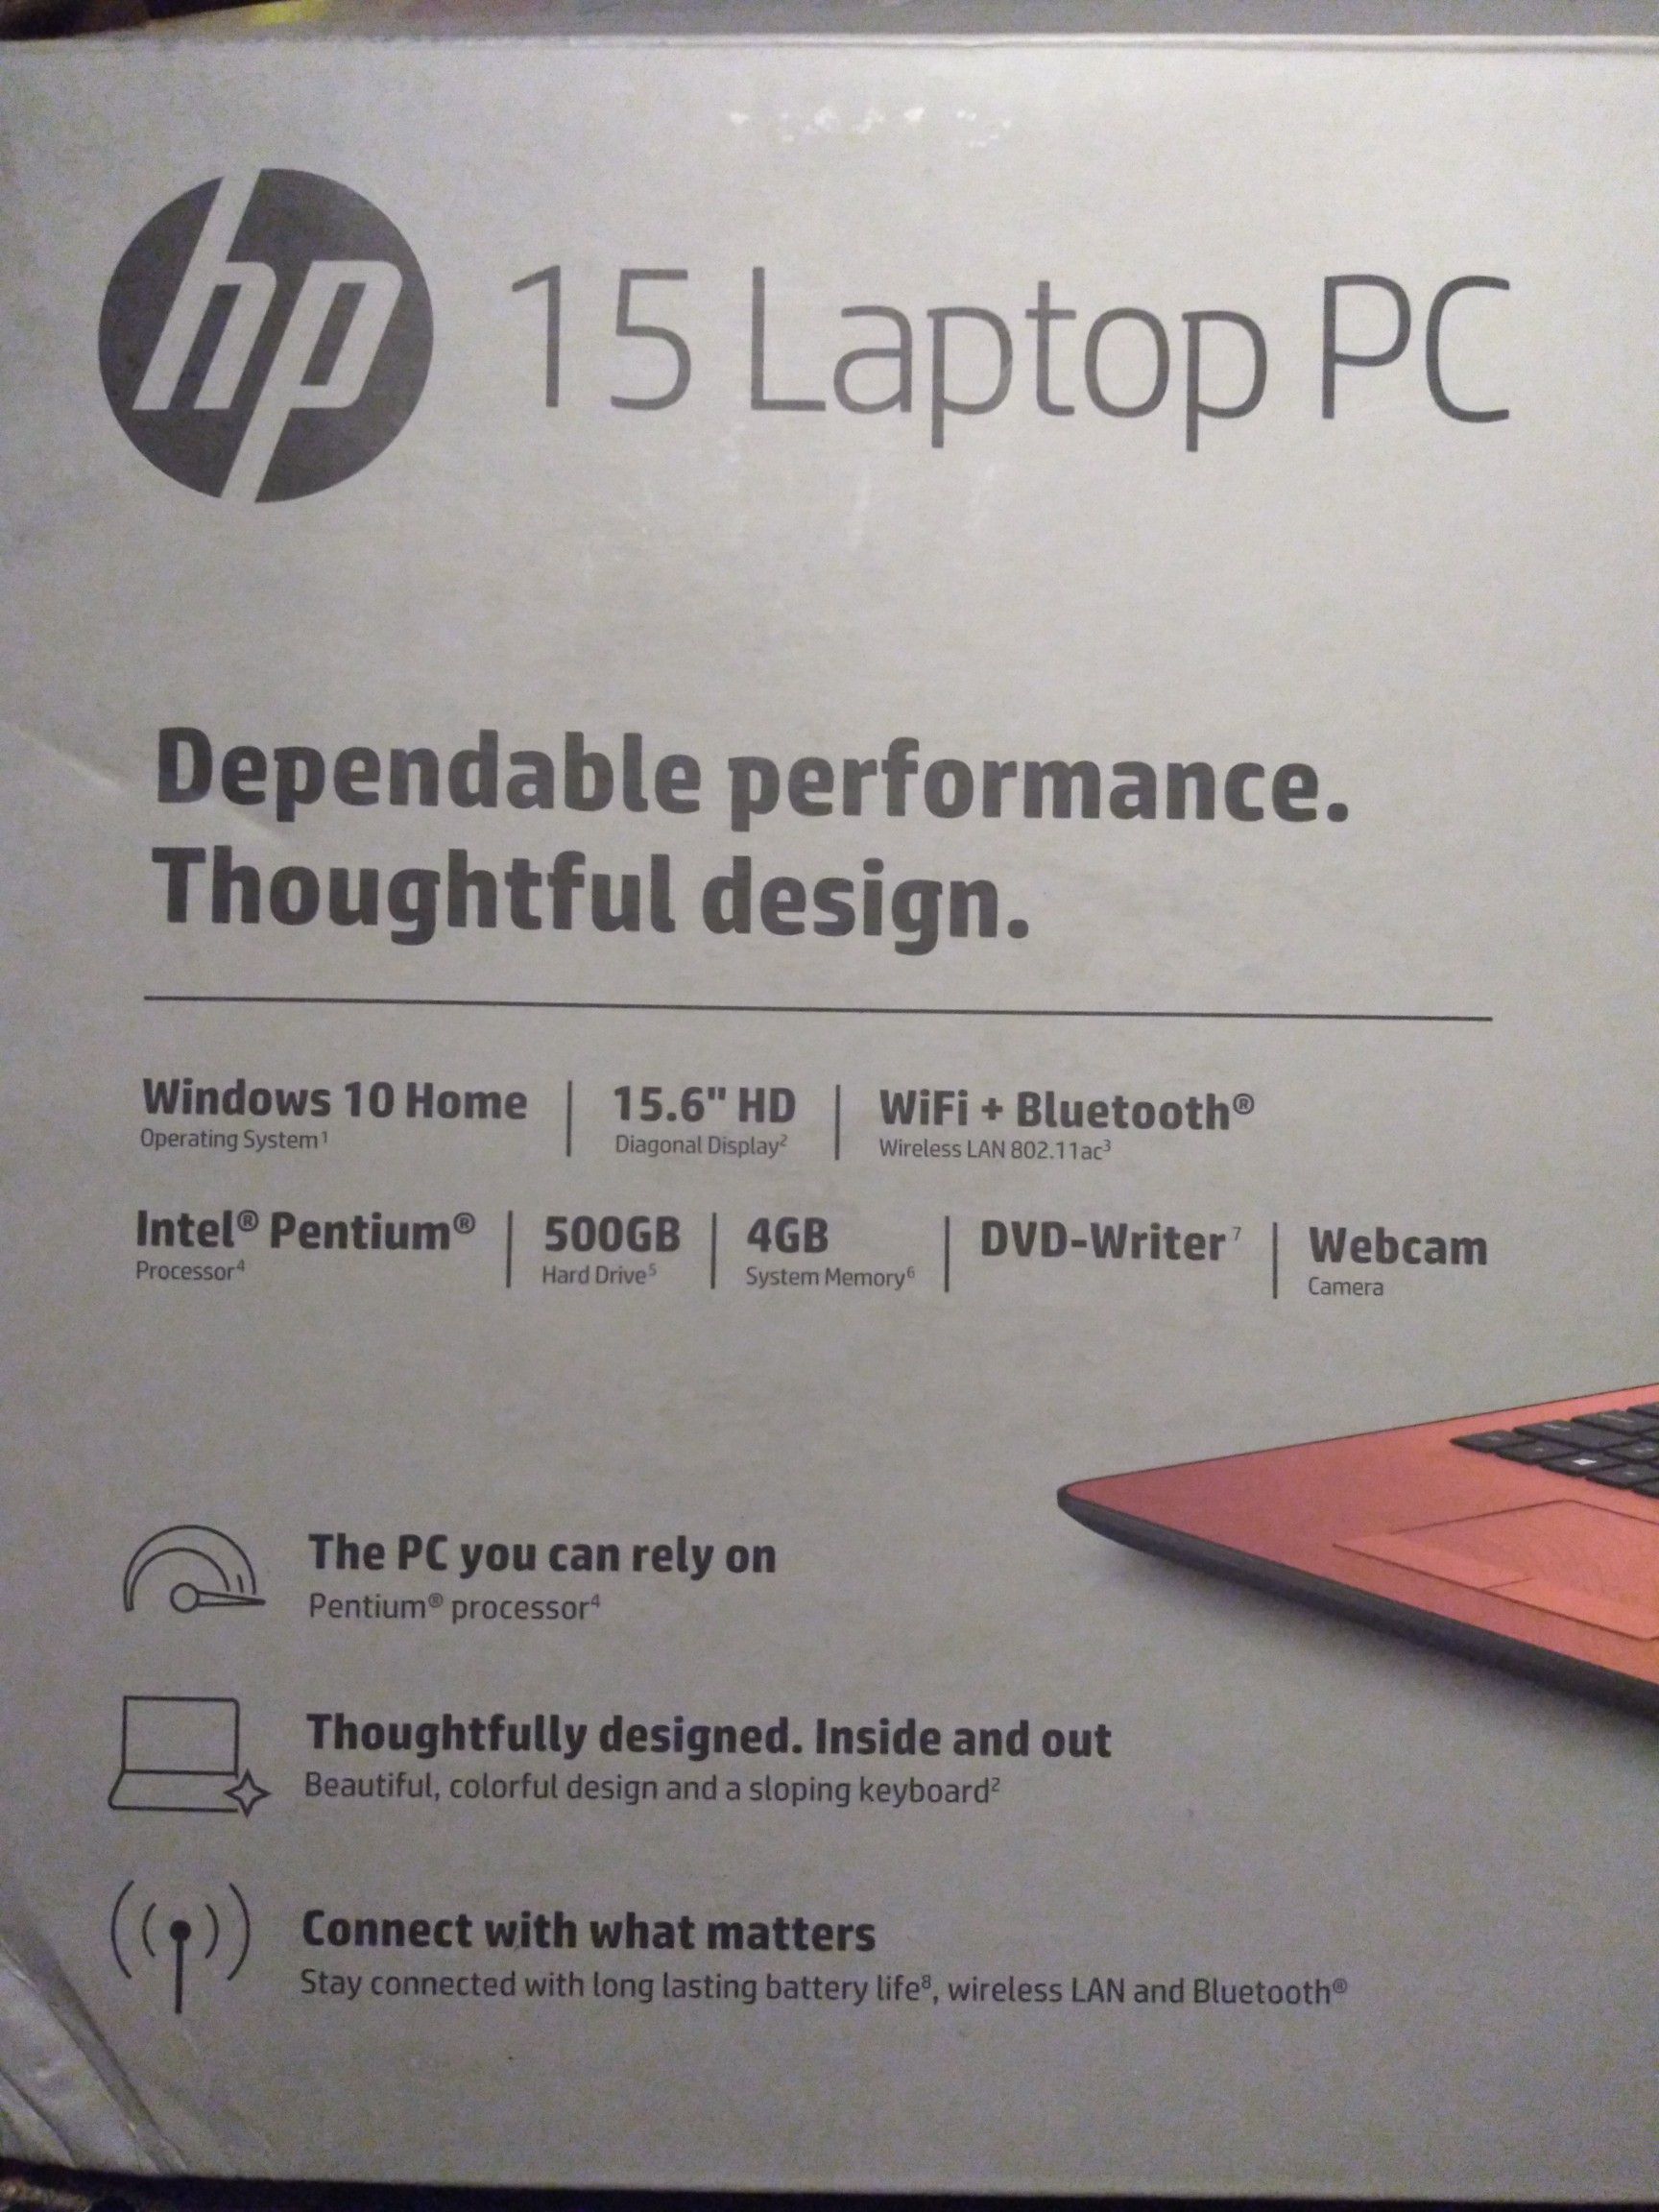 Hp 15 laptop PC